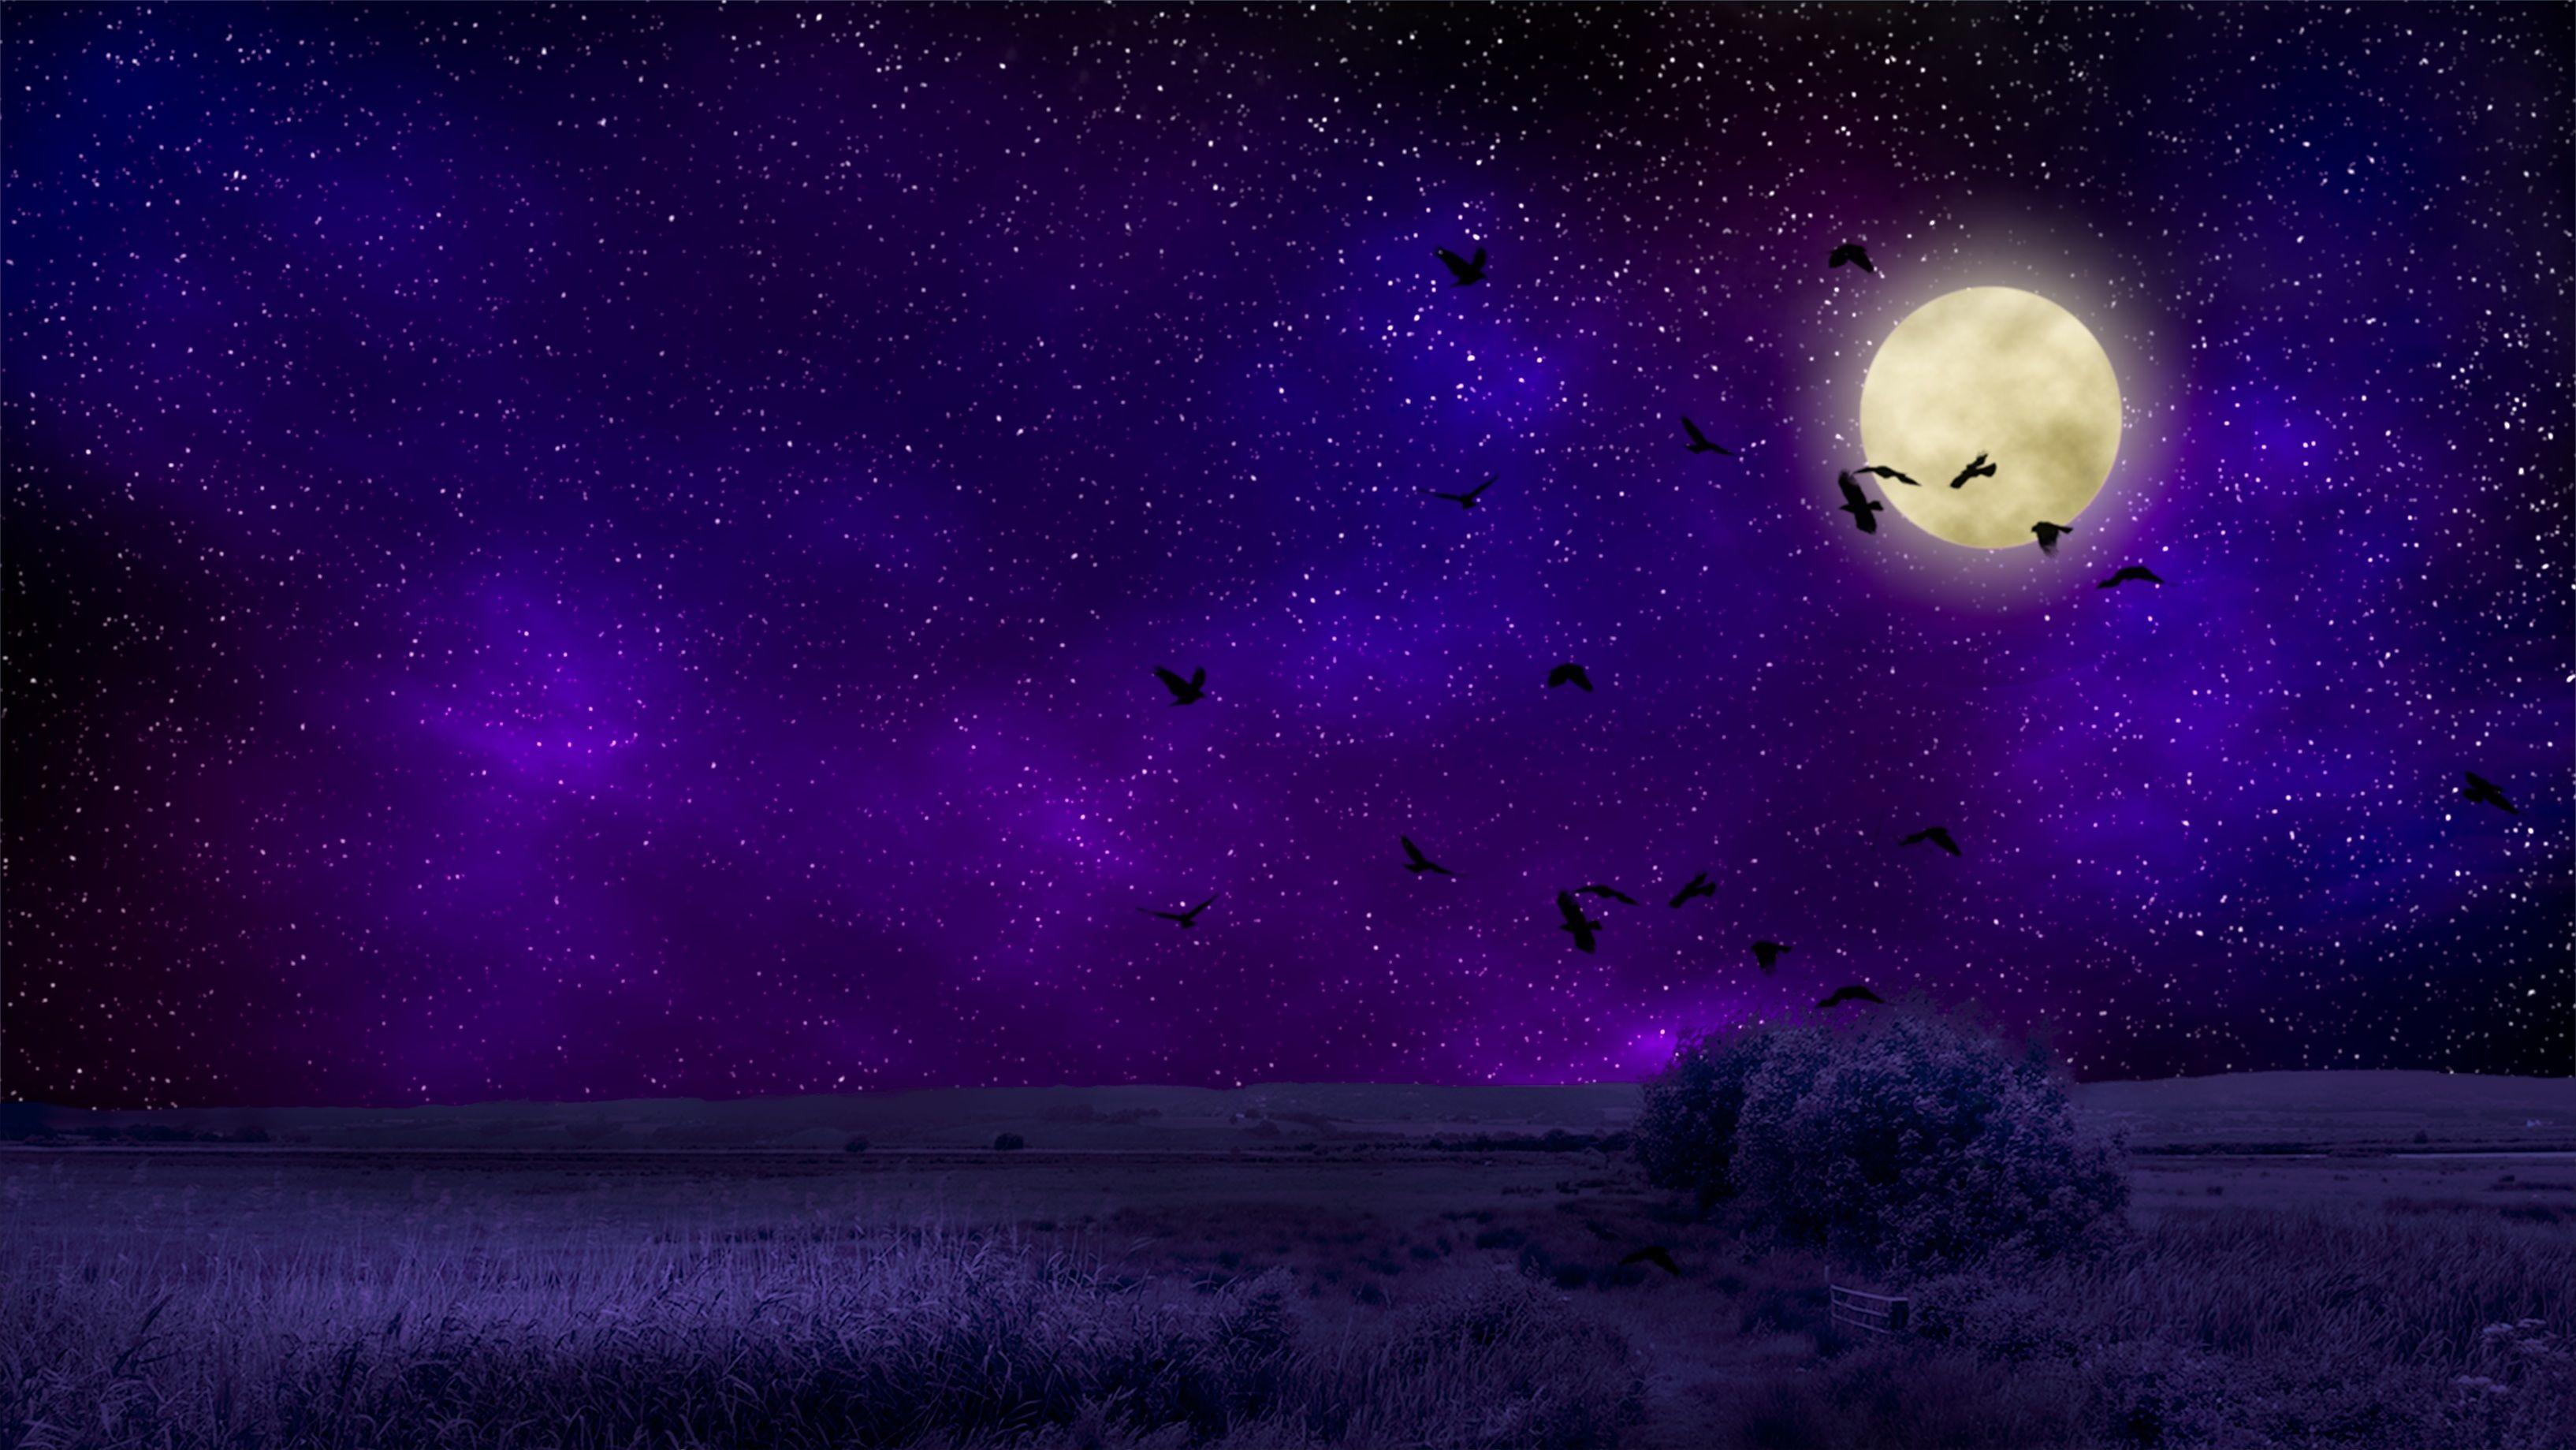 Purple Moon Wallpapers Top Free Purple Moon Backgrounds WallpaperAccess